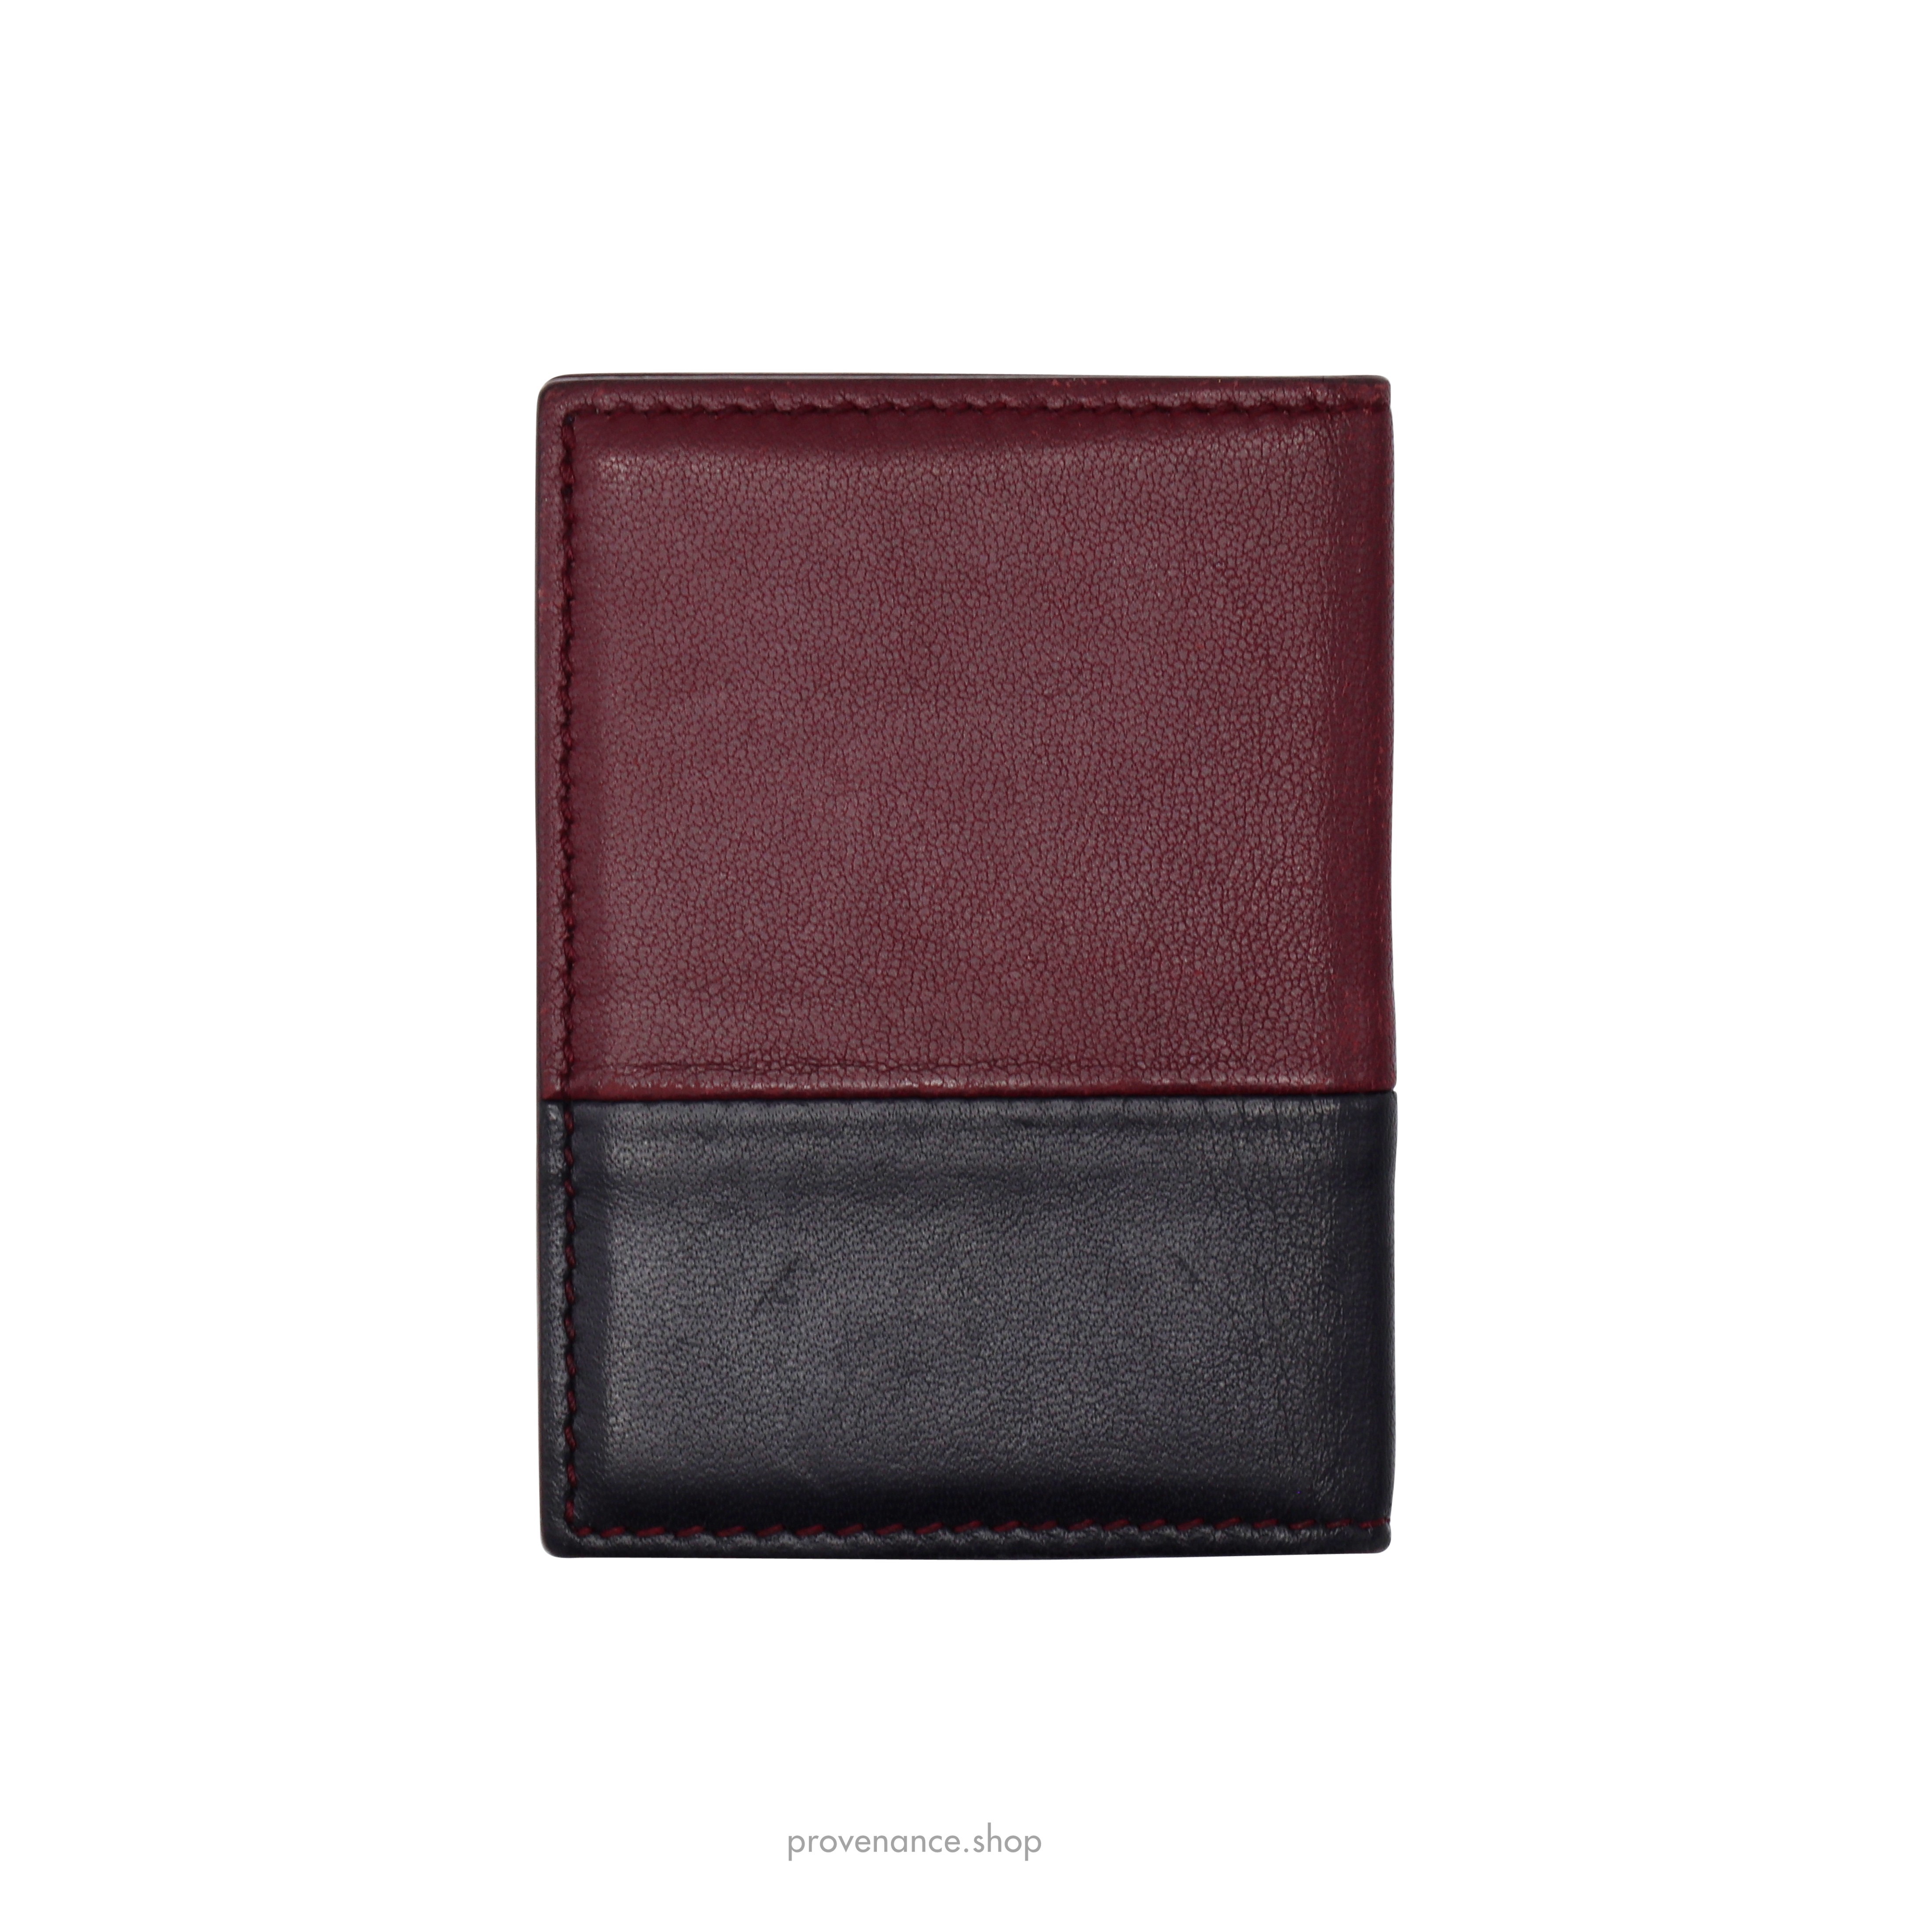 Pocket Organizer Wallet - Black & Burgundy Leather - 2